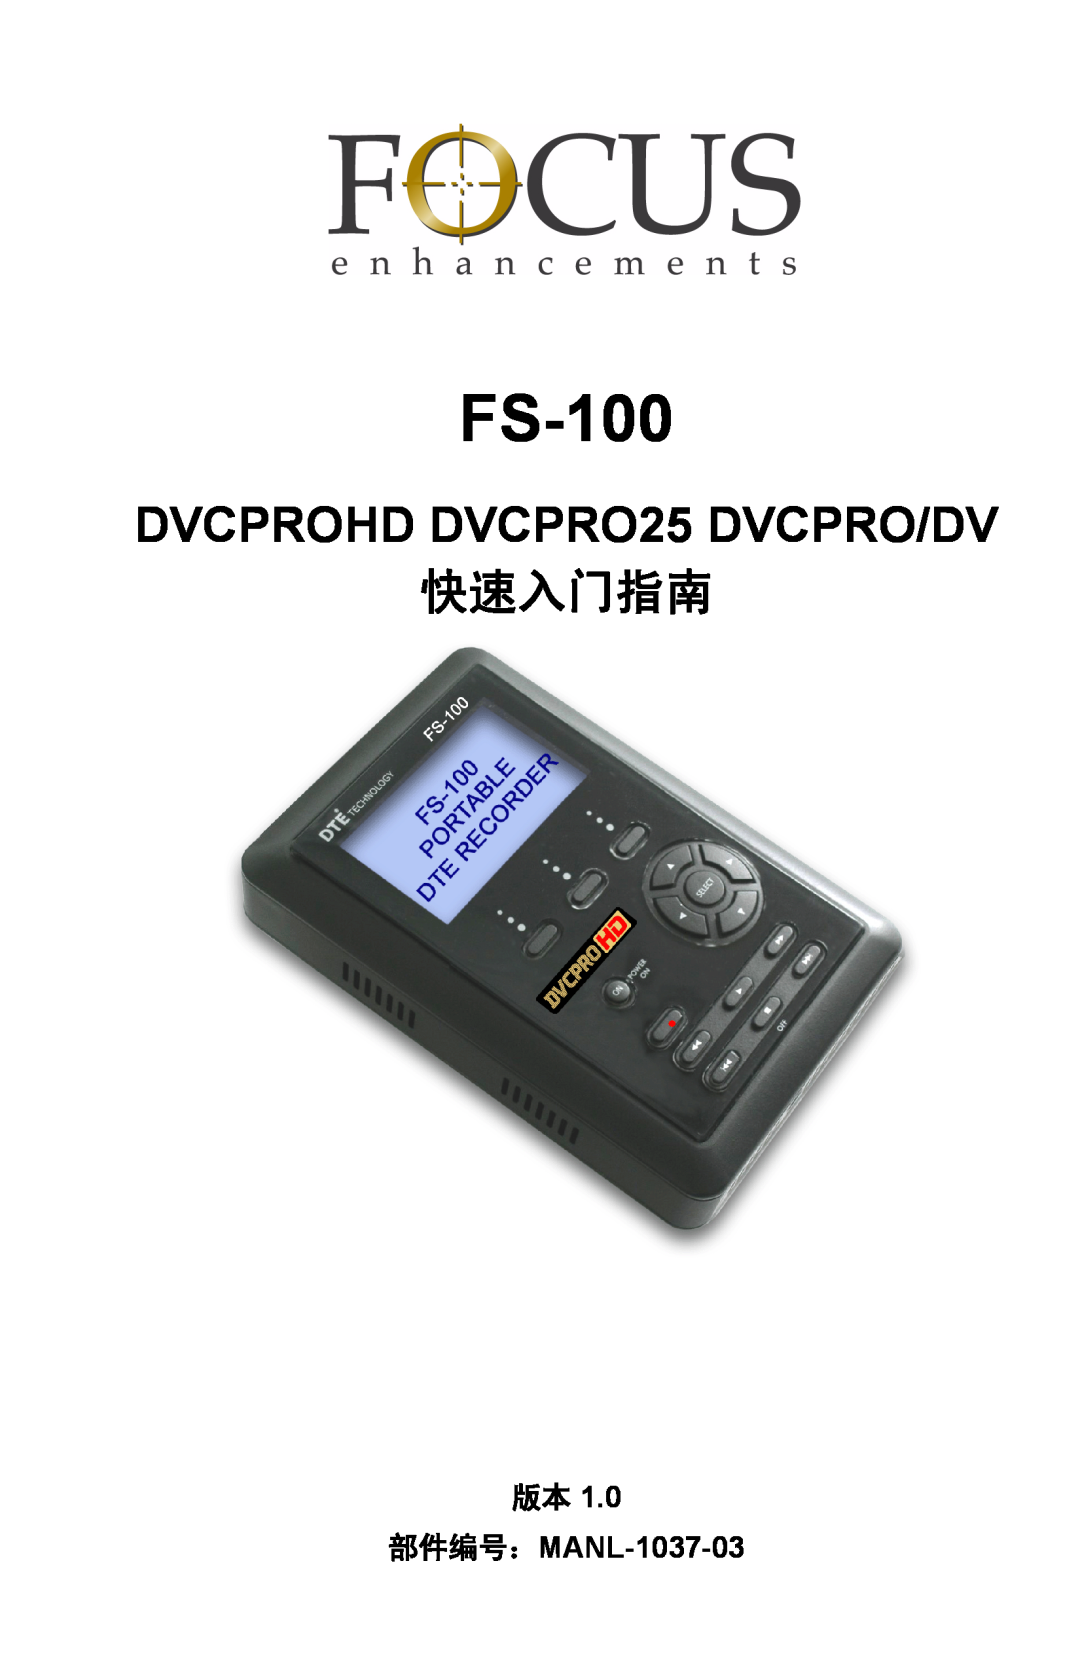 FOCUS Enhancements manual FS-100, DVCPROHD DVCPRO25 DVCPRO/DV, 快速入门指南, 部件编号：MANL-1037-03 